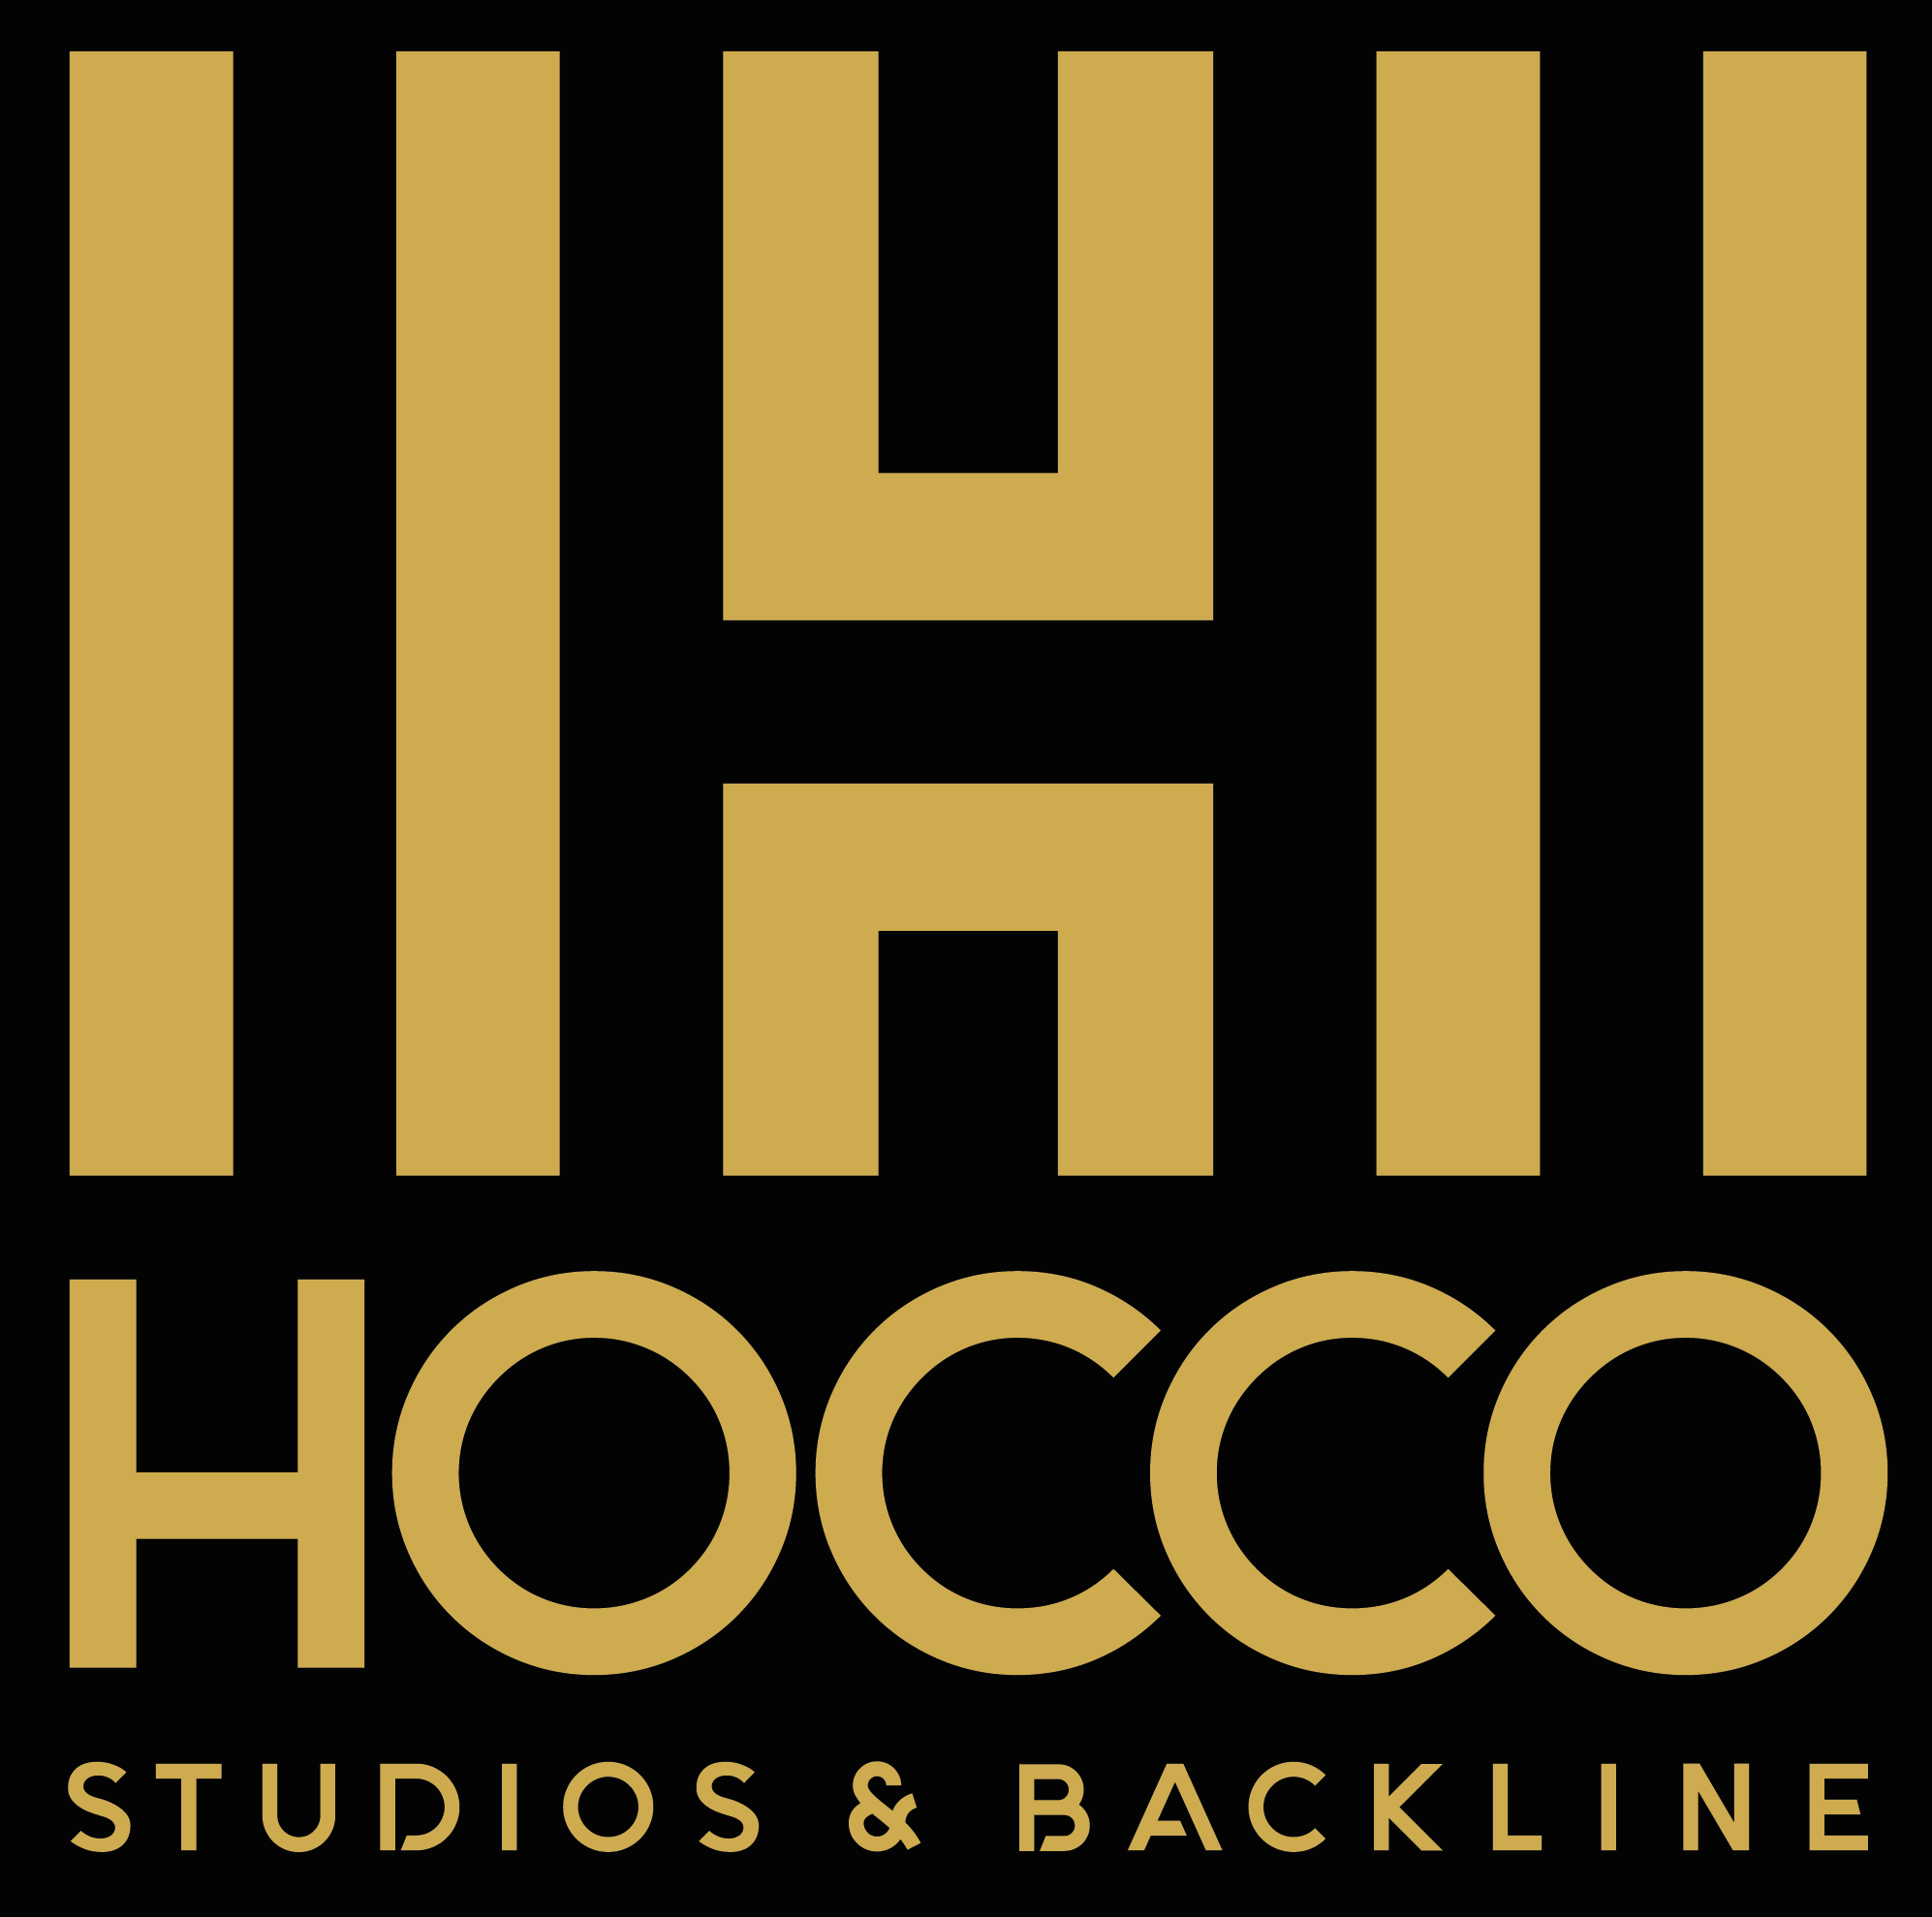 Hocco Studios